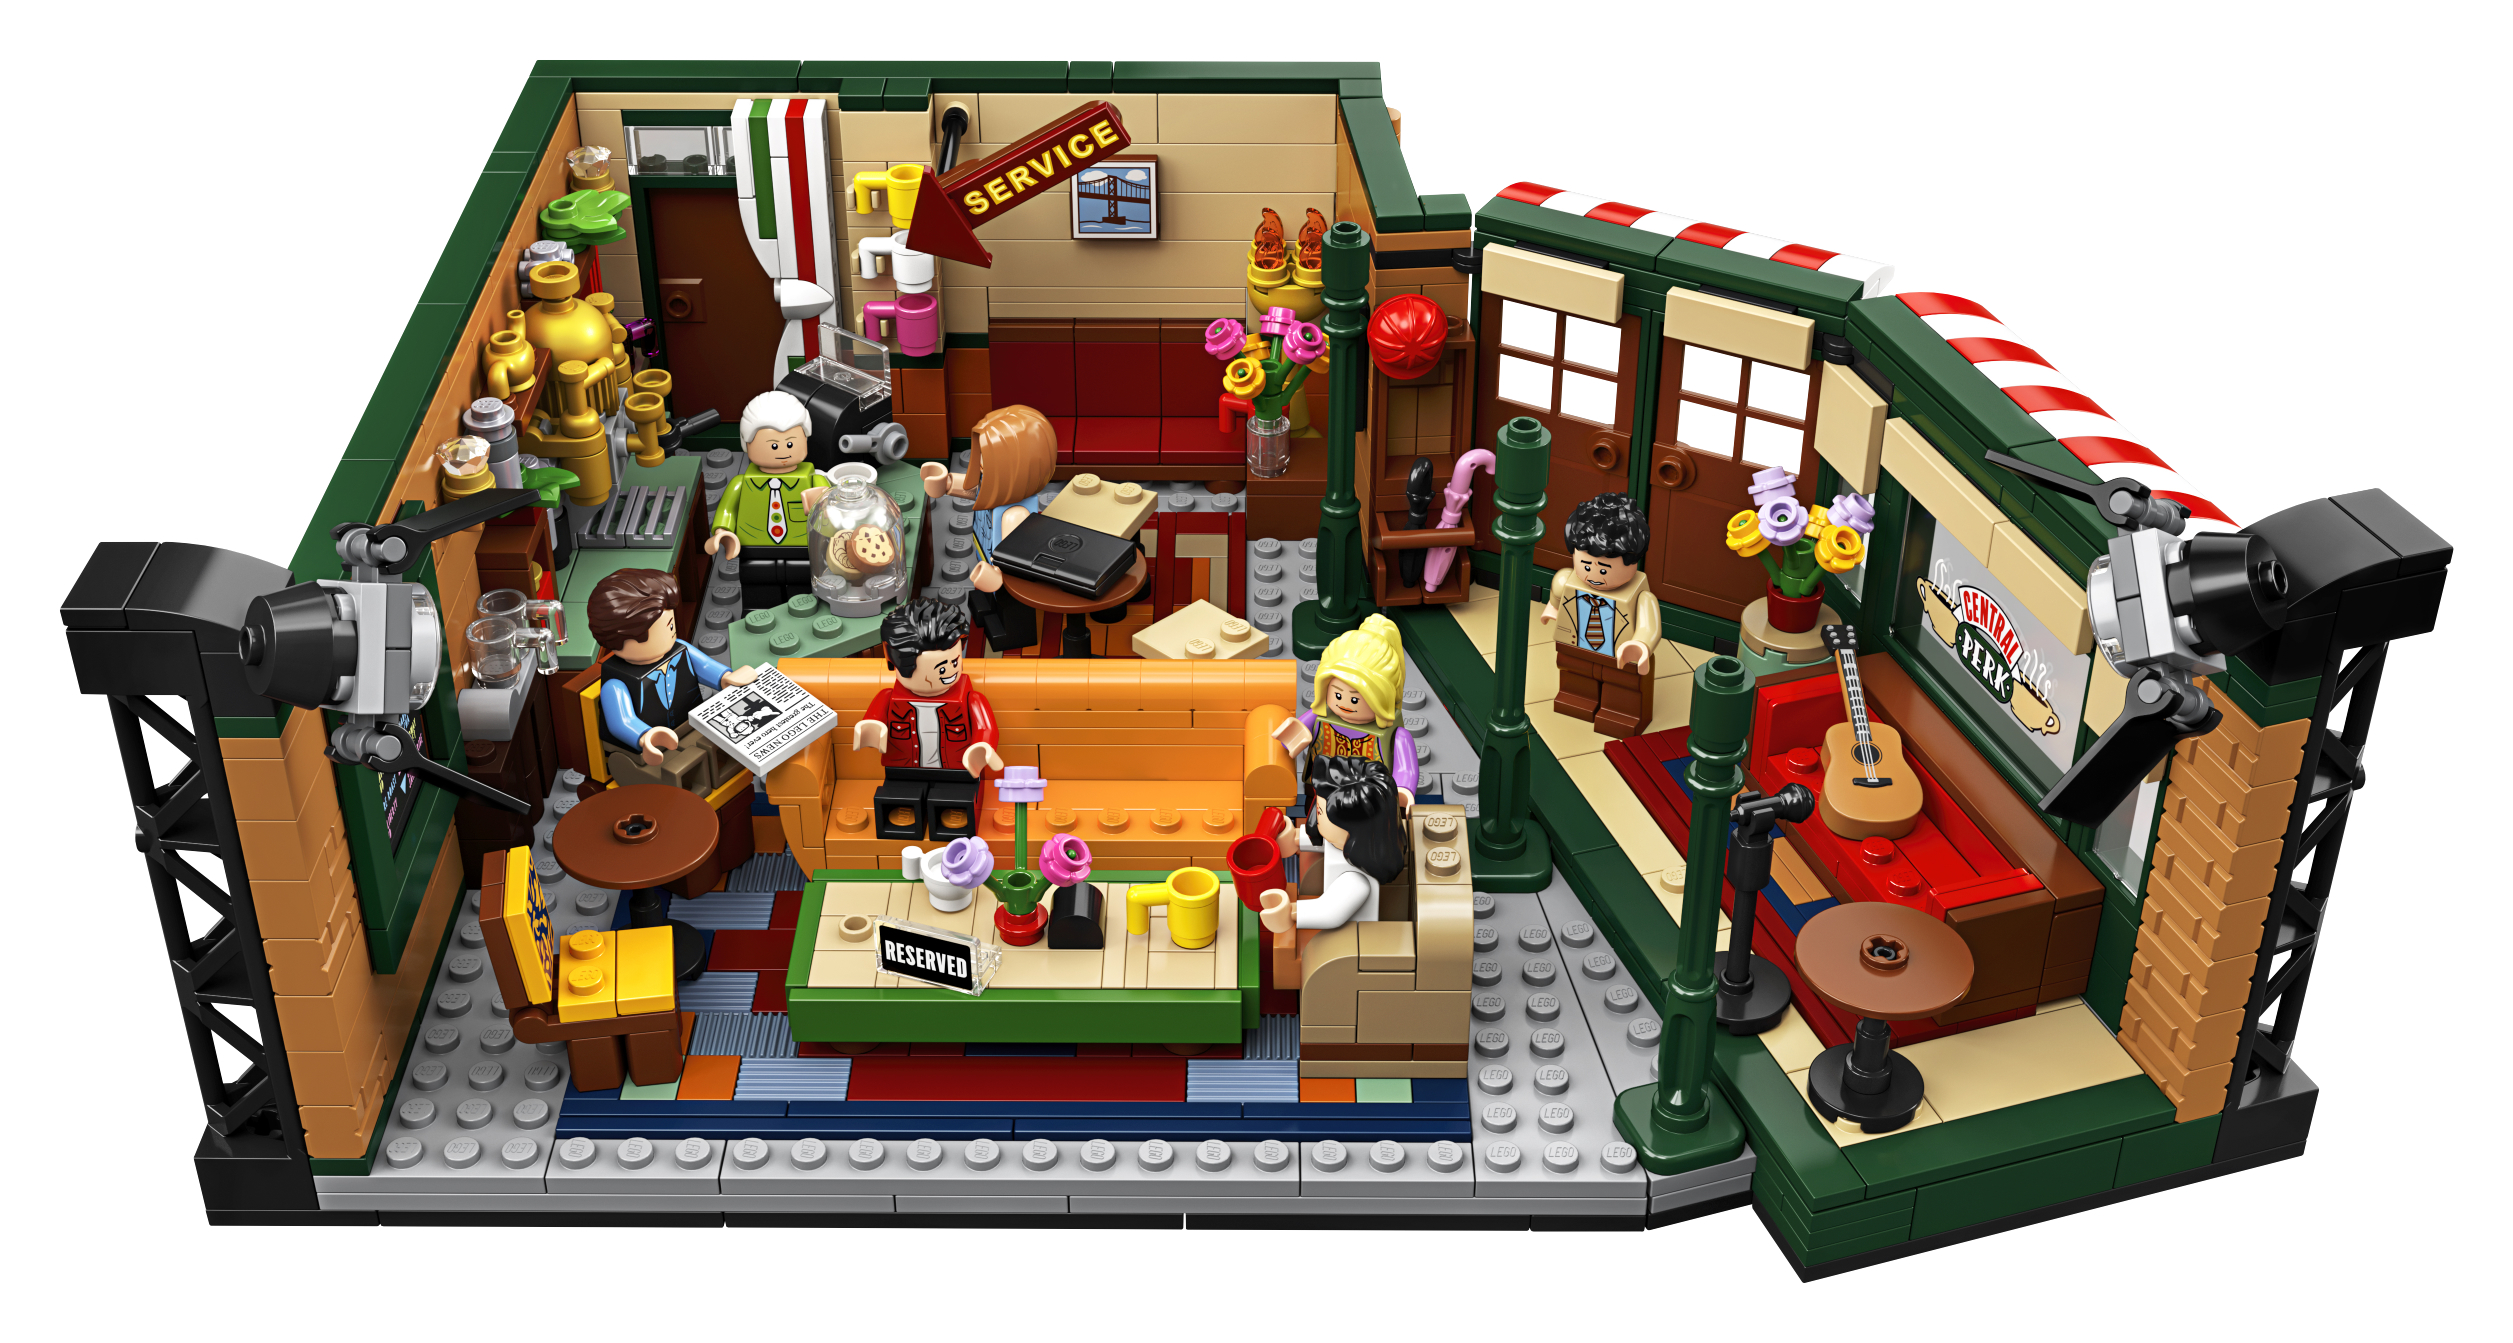 LEGO Friends Central Perk